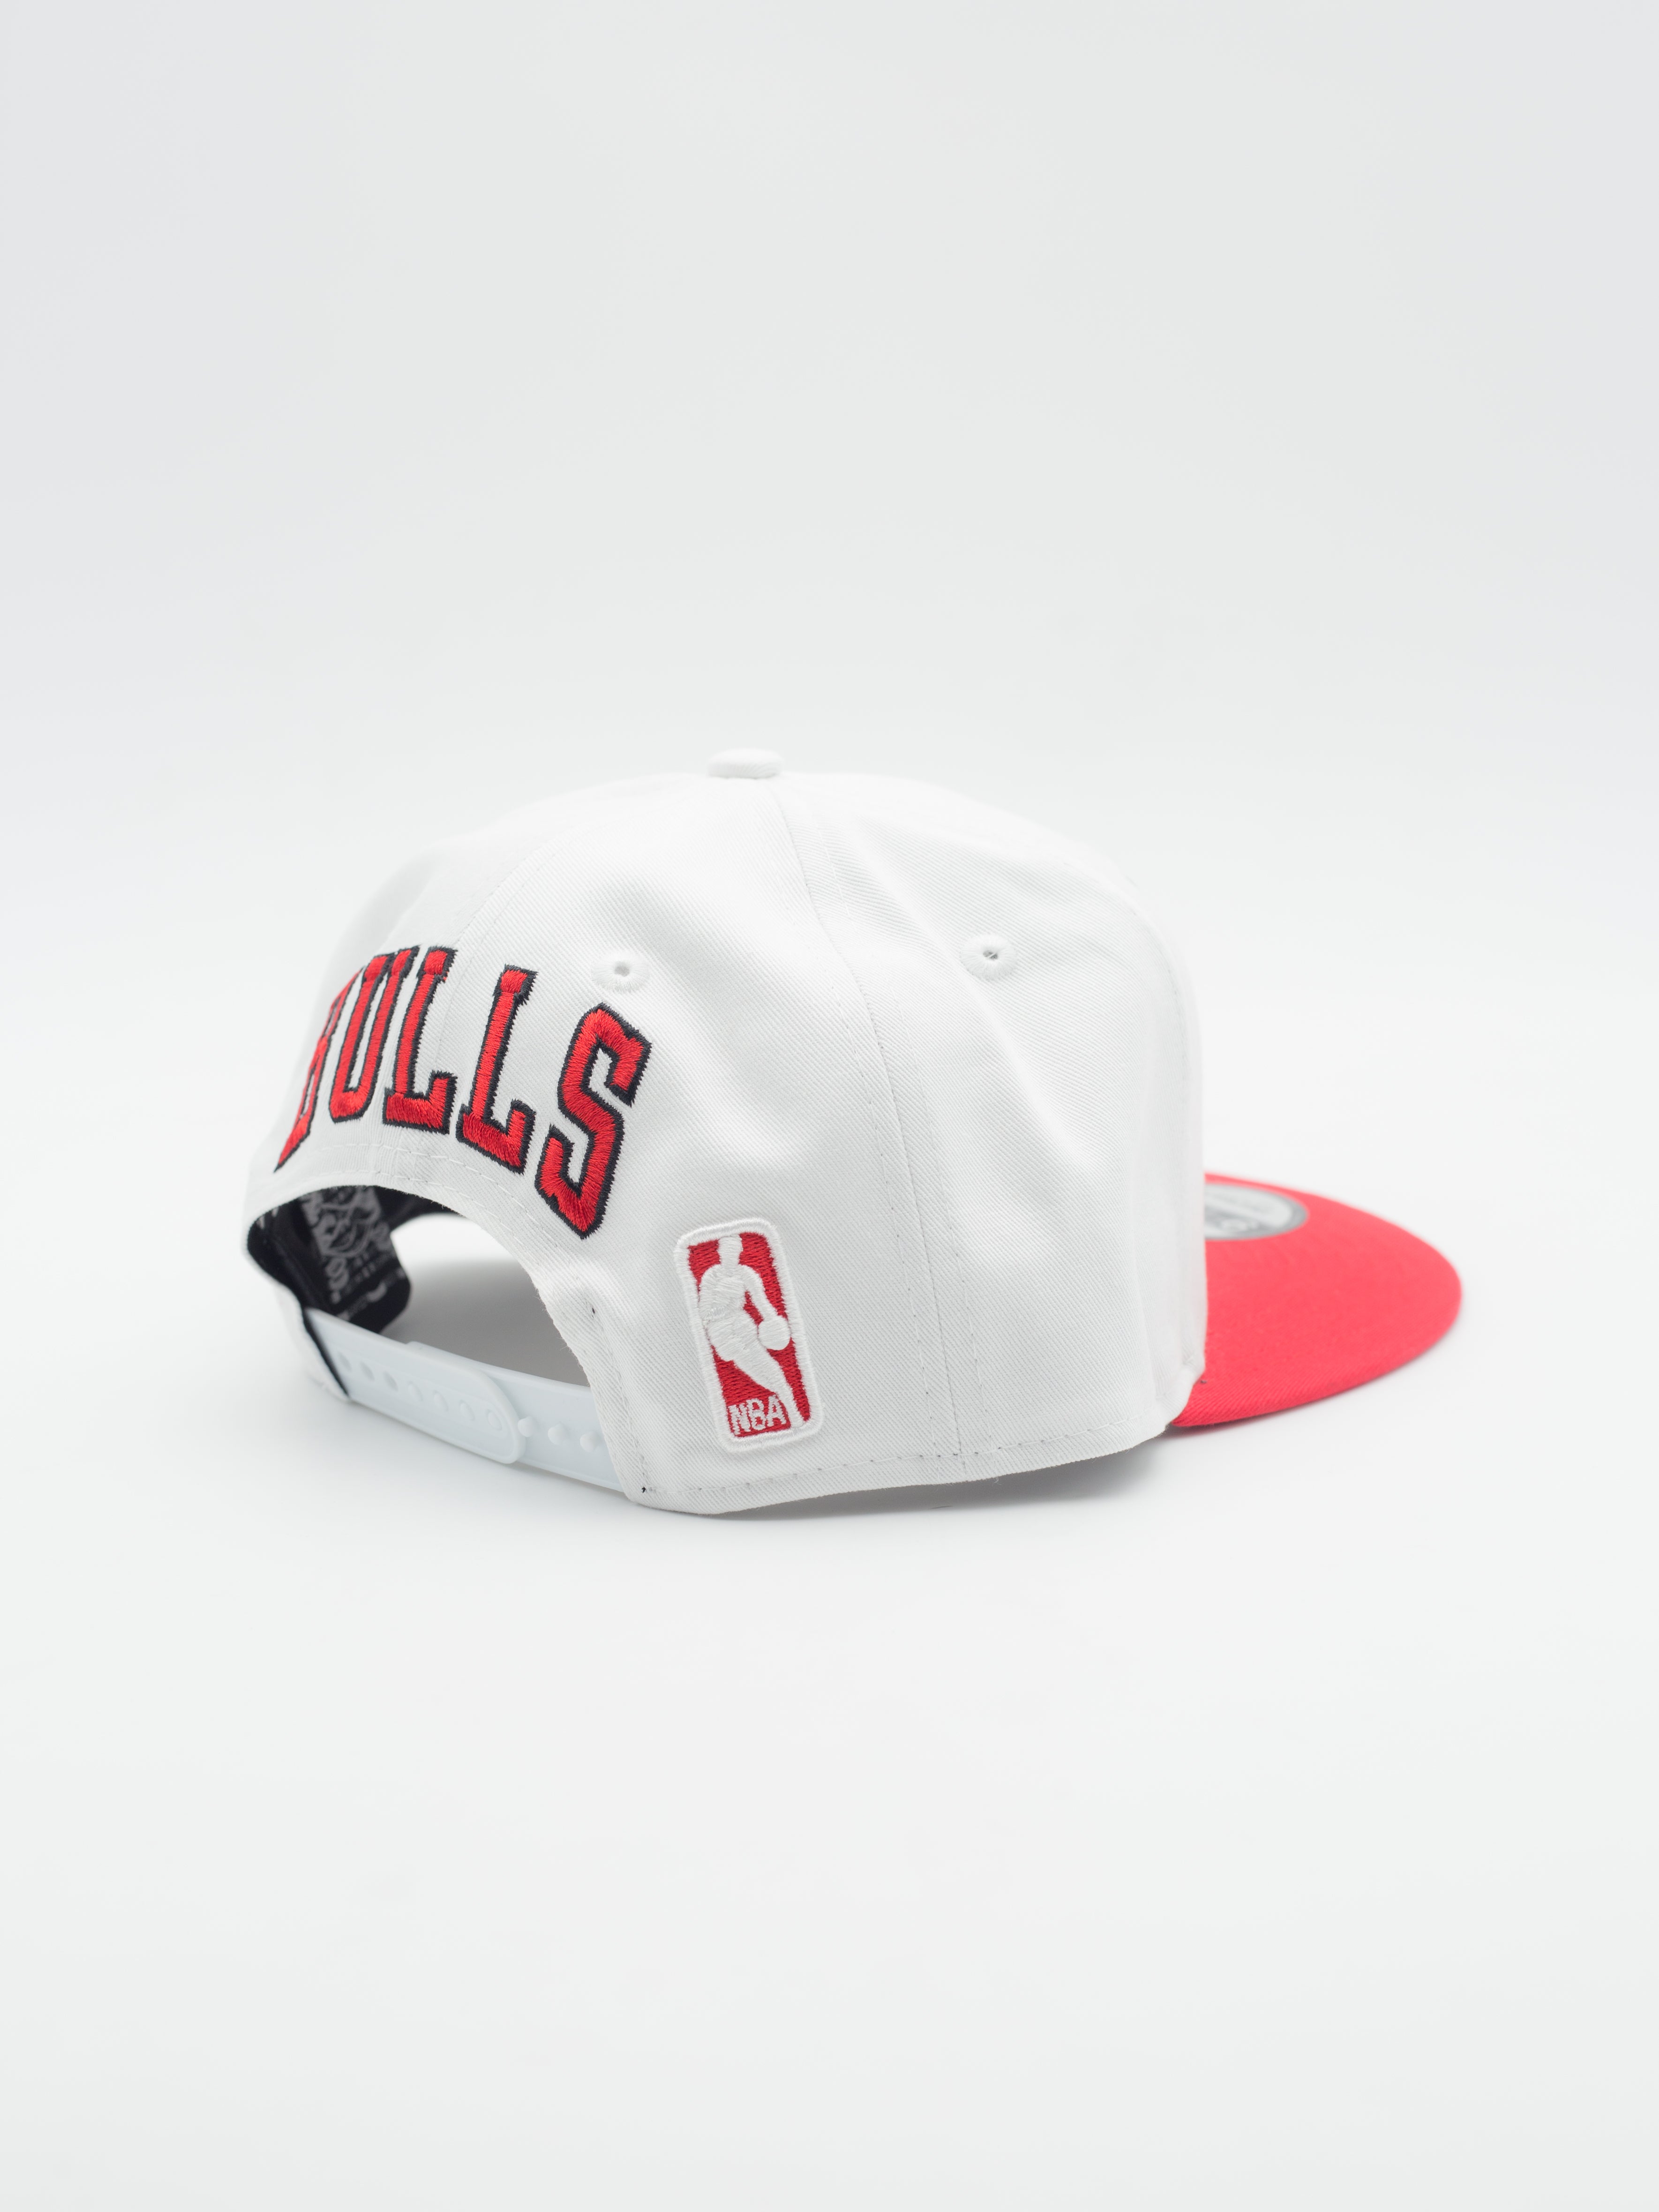 Gorra plana blanca y roja snapback 9FIFTY White Crown de Chicago Bulls NBA  de New Era